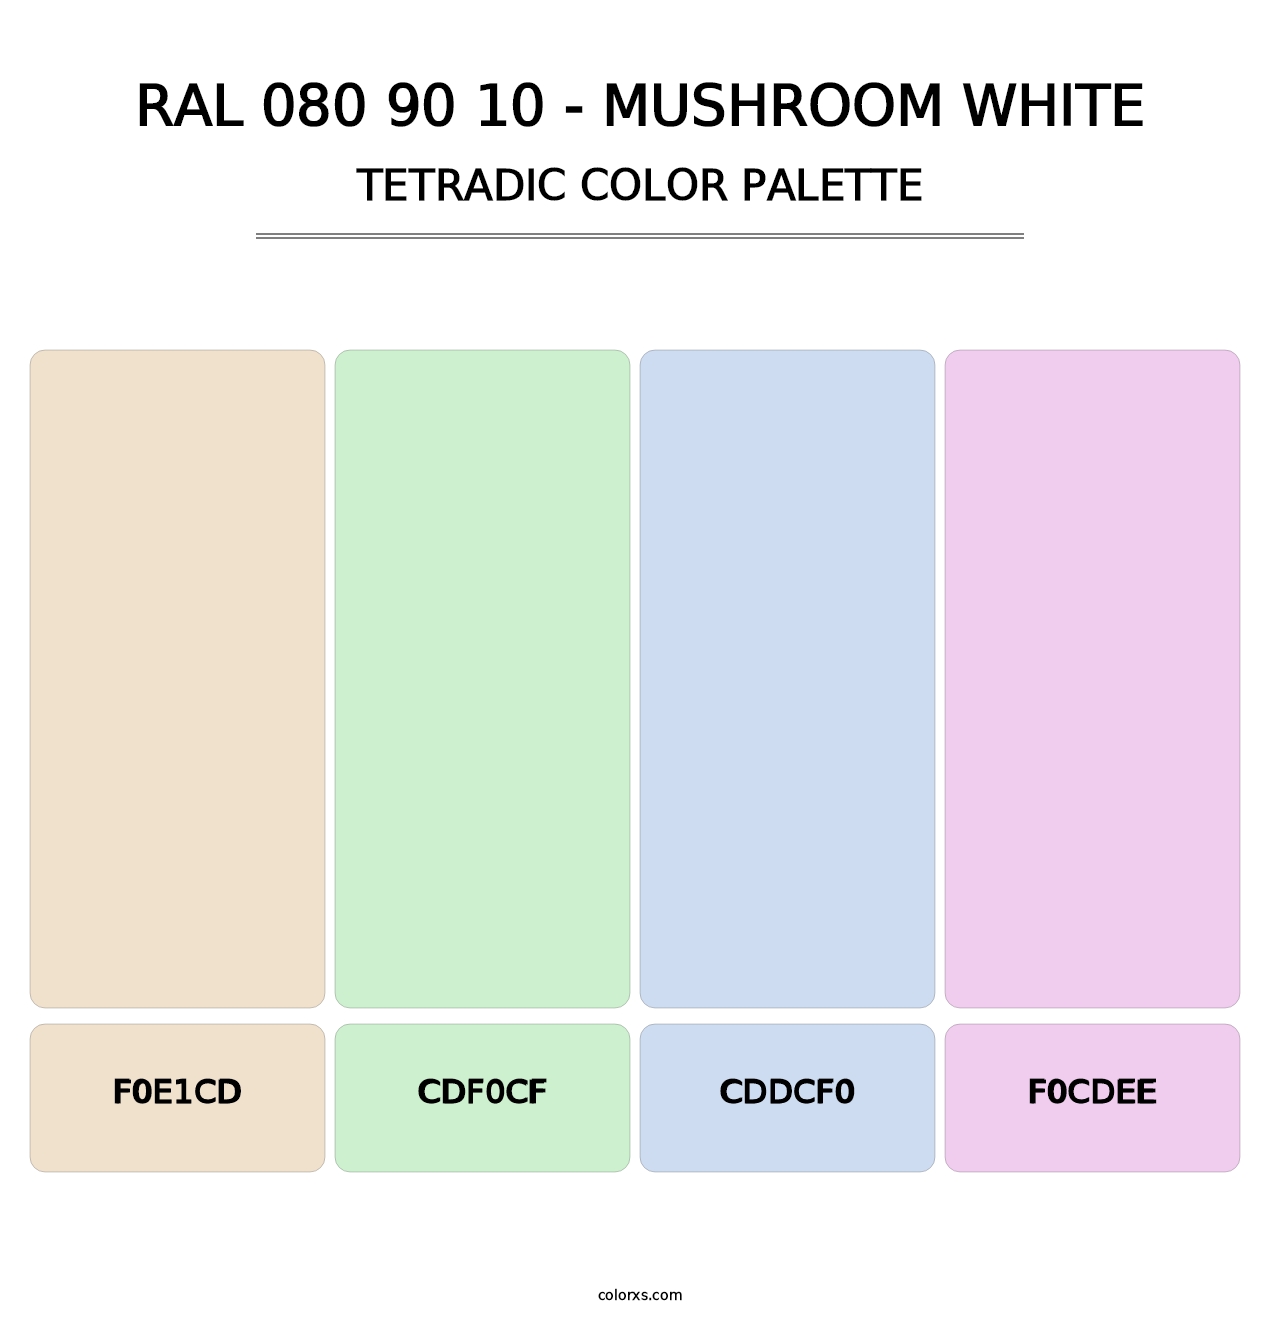 RAL 080 90 10 - Mushroom White - Tetradic Color Palette